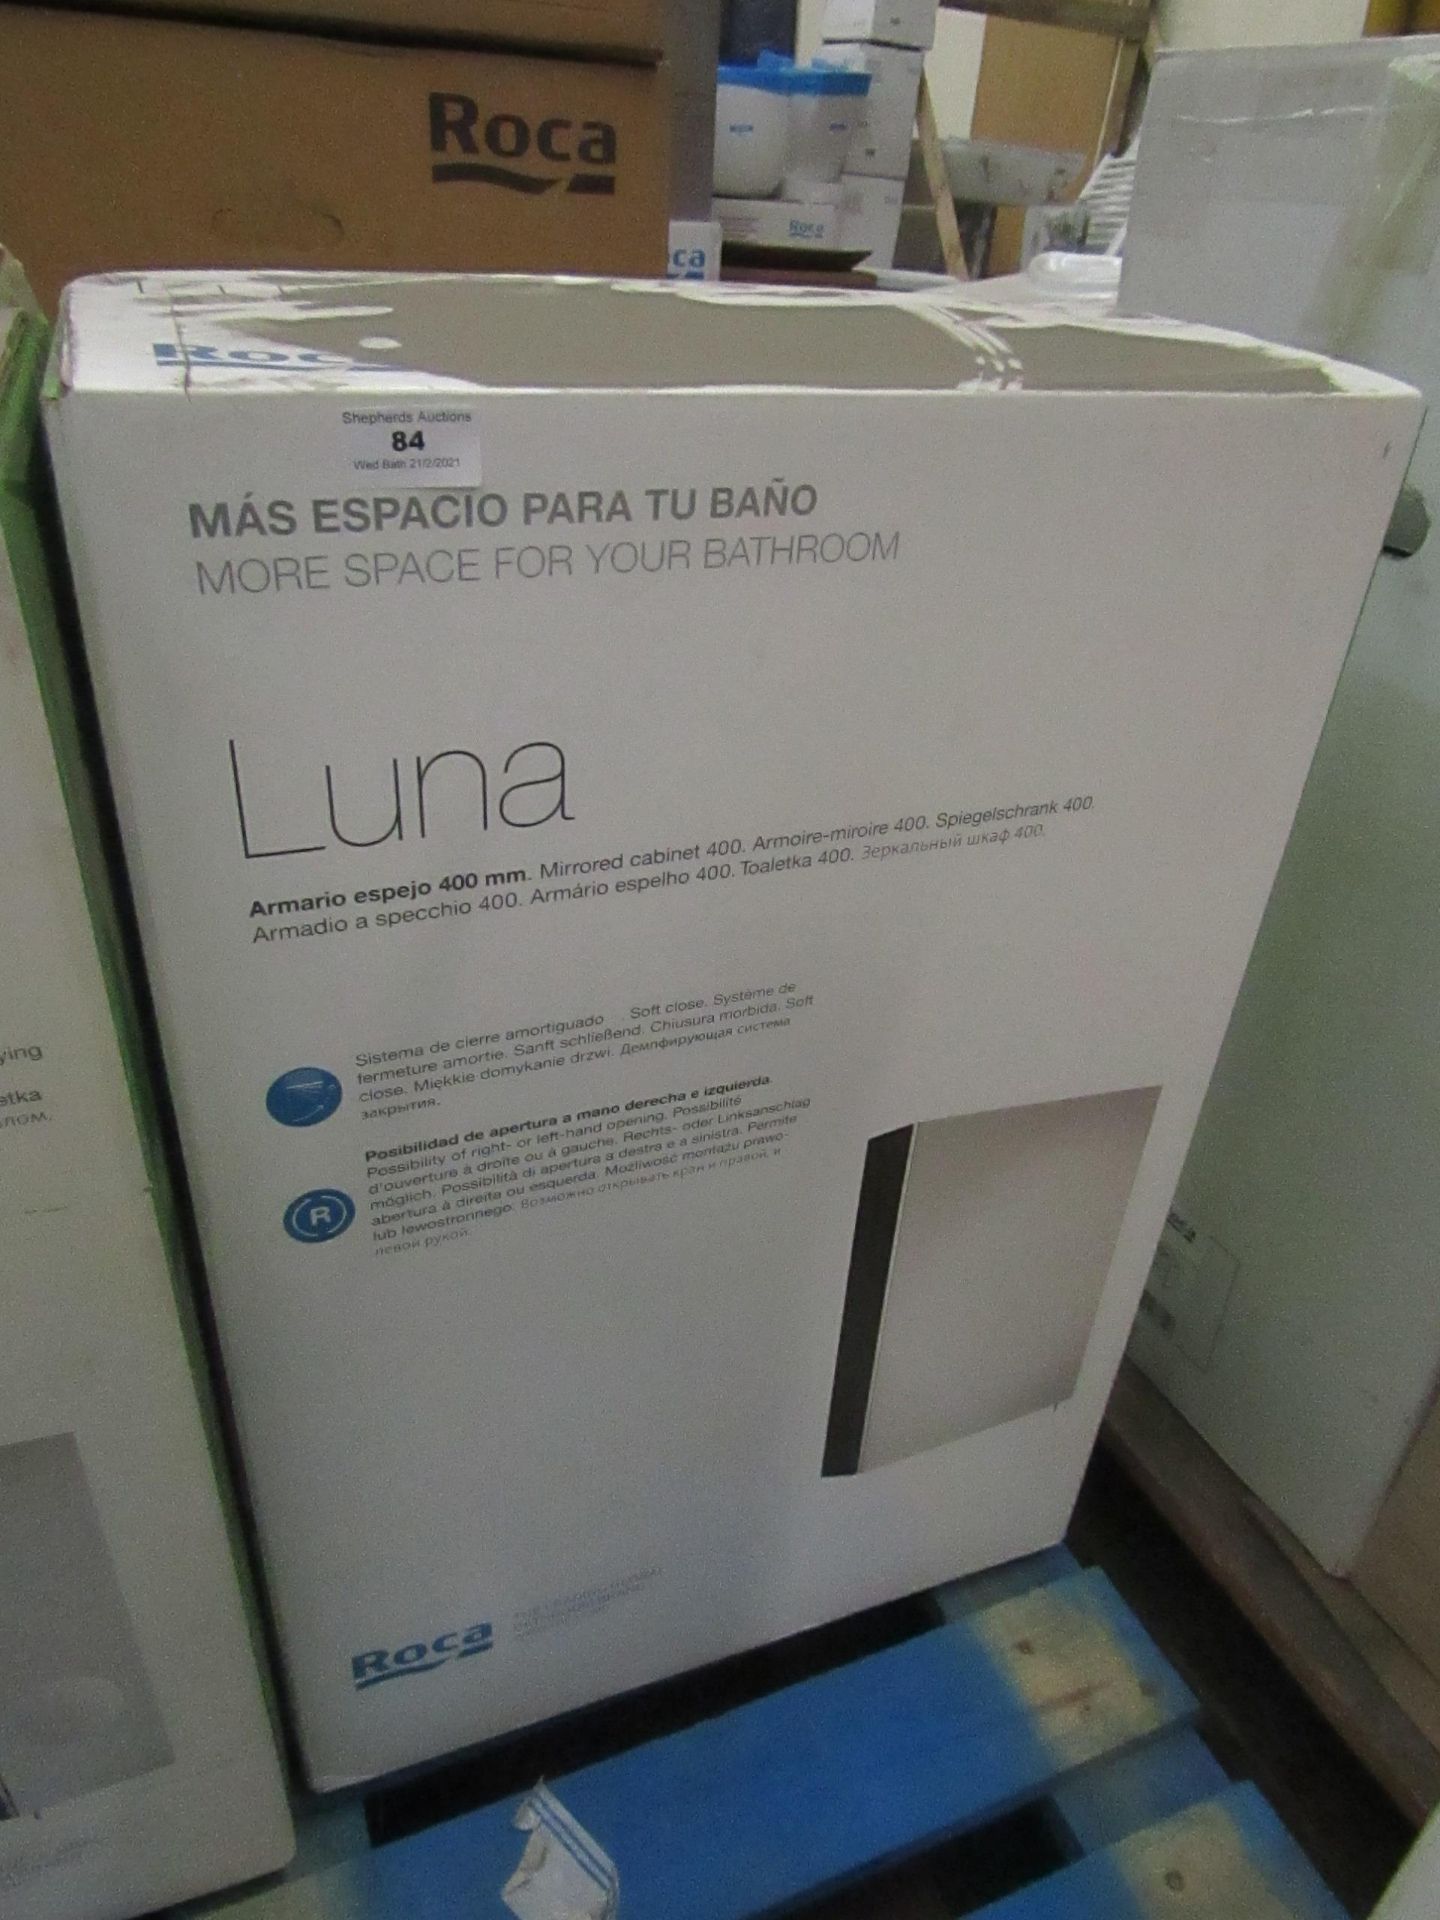 Roca Luna 400mm bathroom mirror, new and boxed.